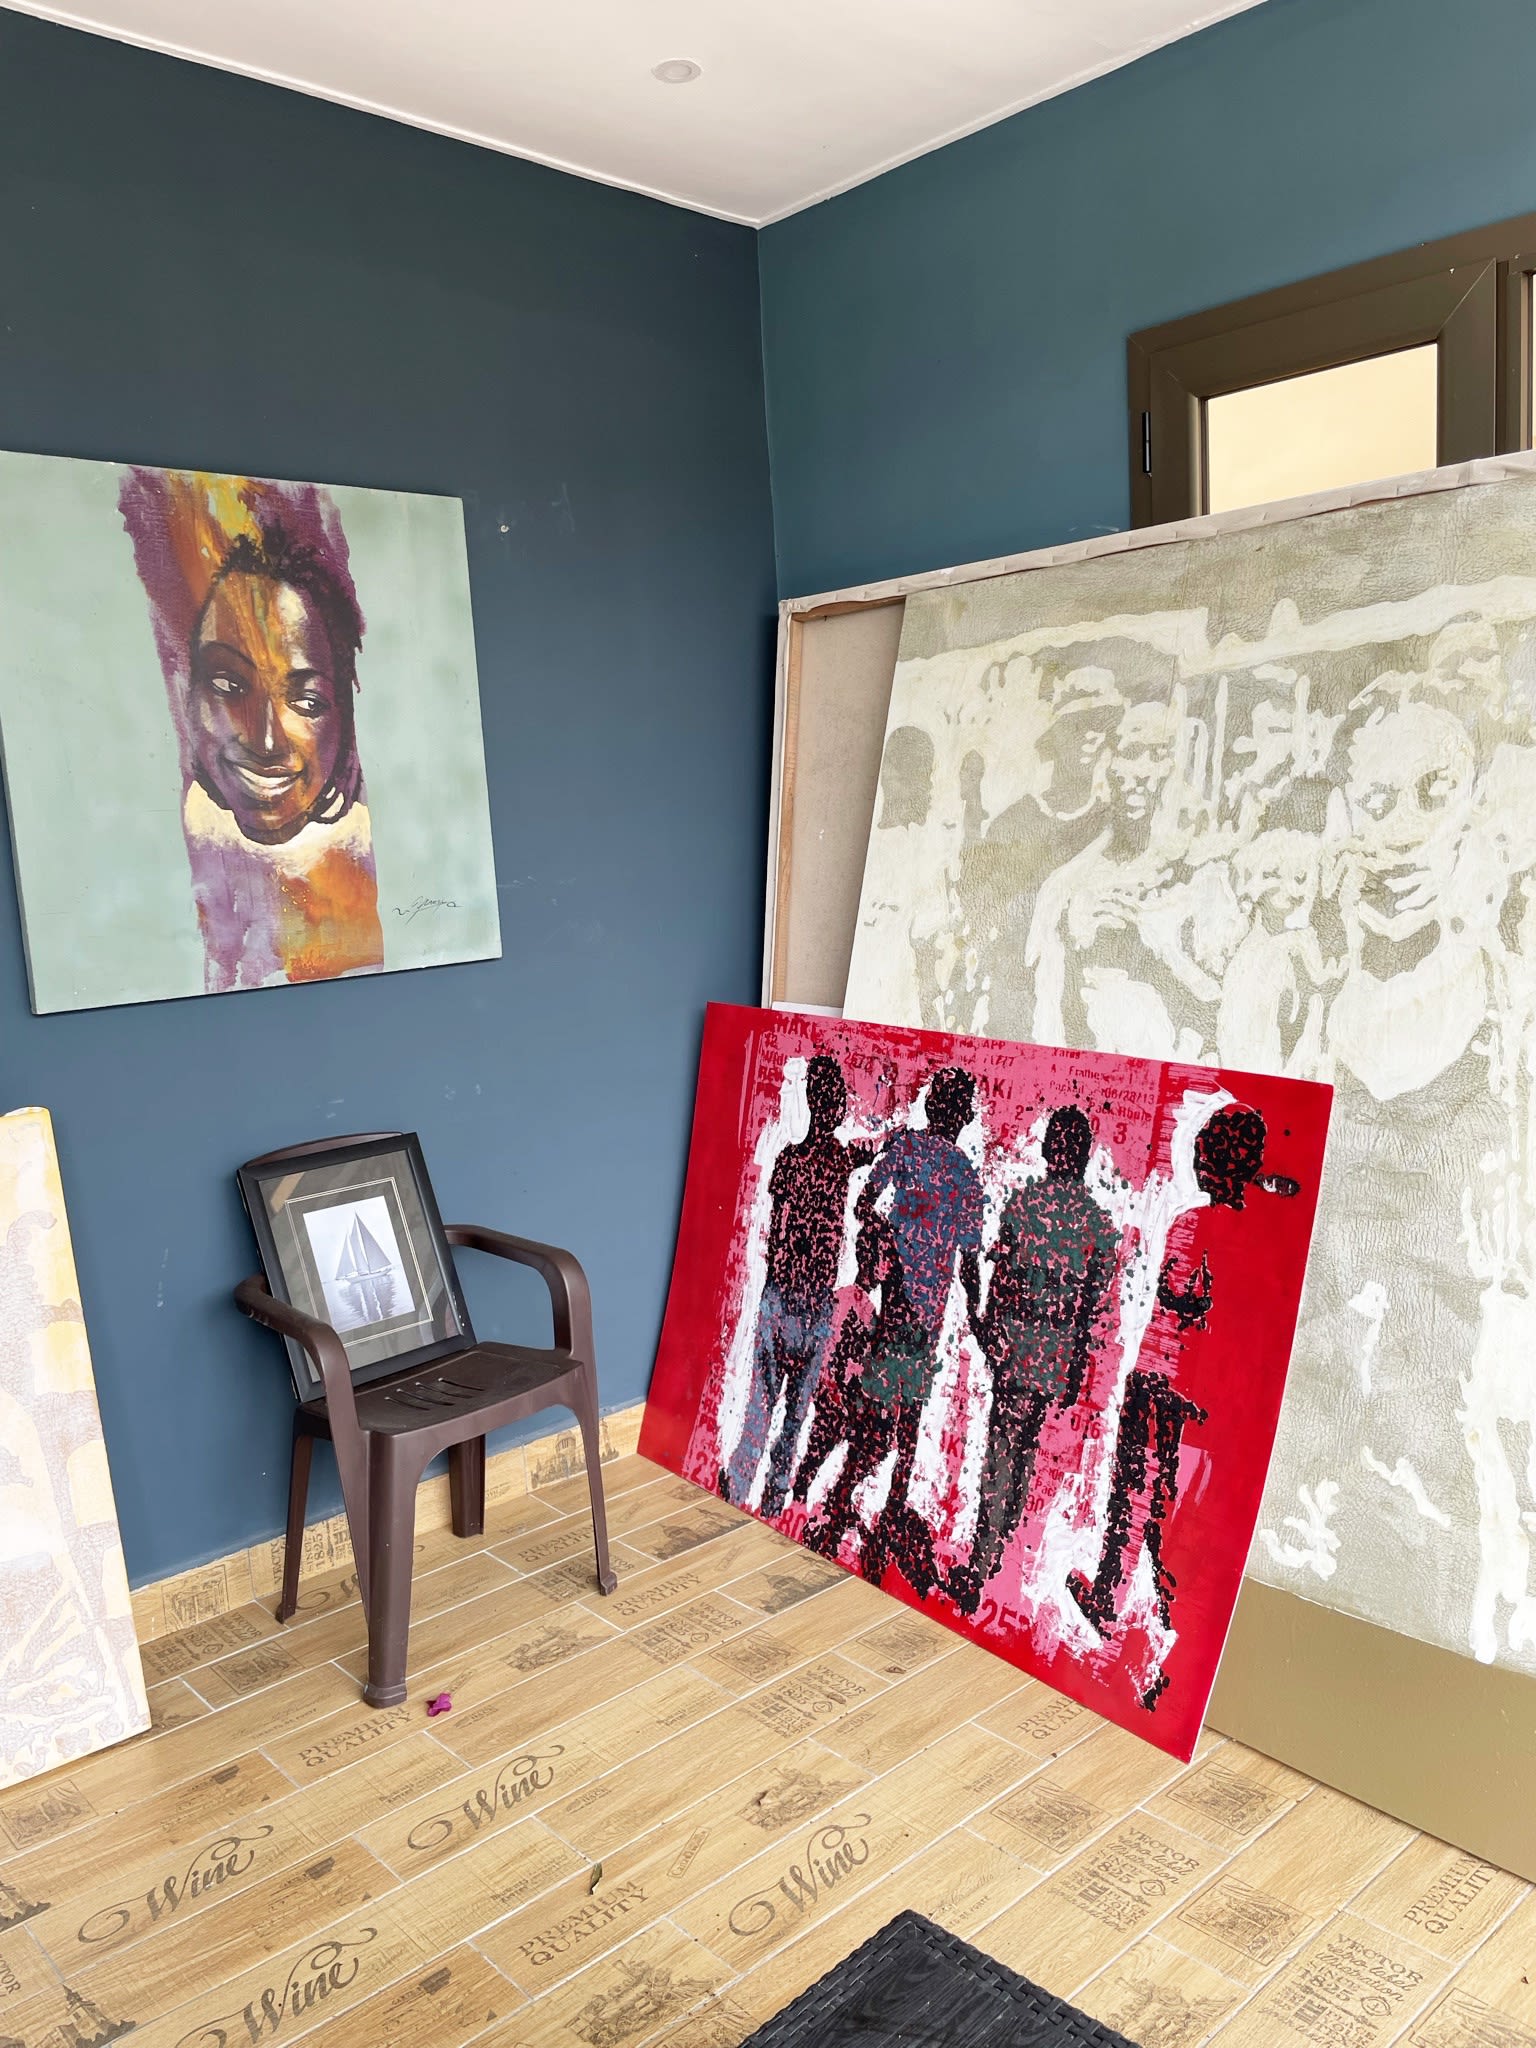 artworks by Saint-Etienne Yeanzi in his studio